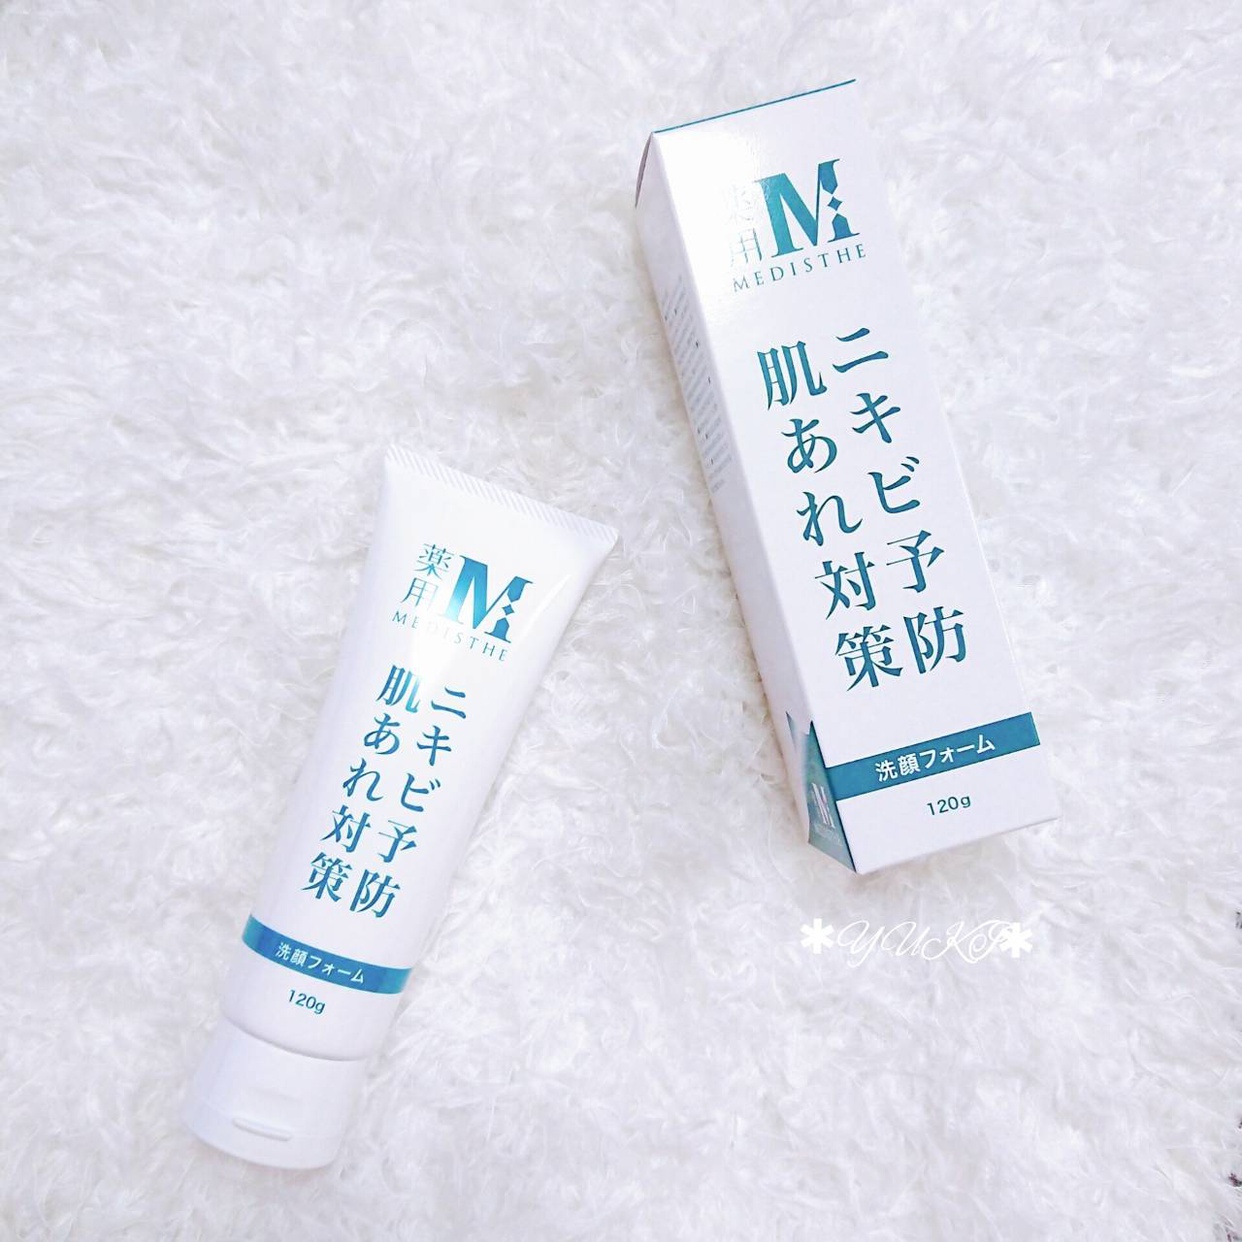 MEDISTHE(メディステ) 薬用 NI-KIBI 洗顔フォームの良い点・メリットに関するYUKIさんの口コミ画像1